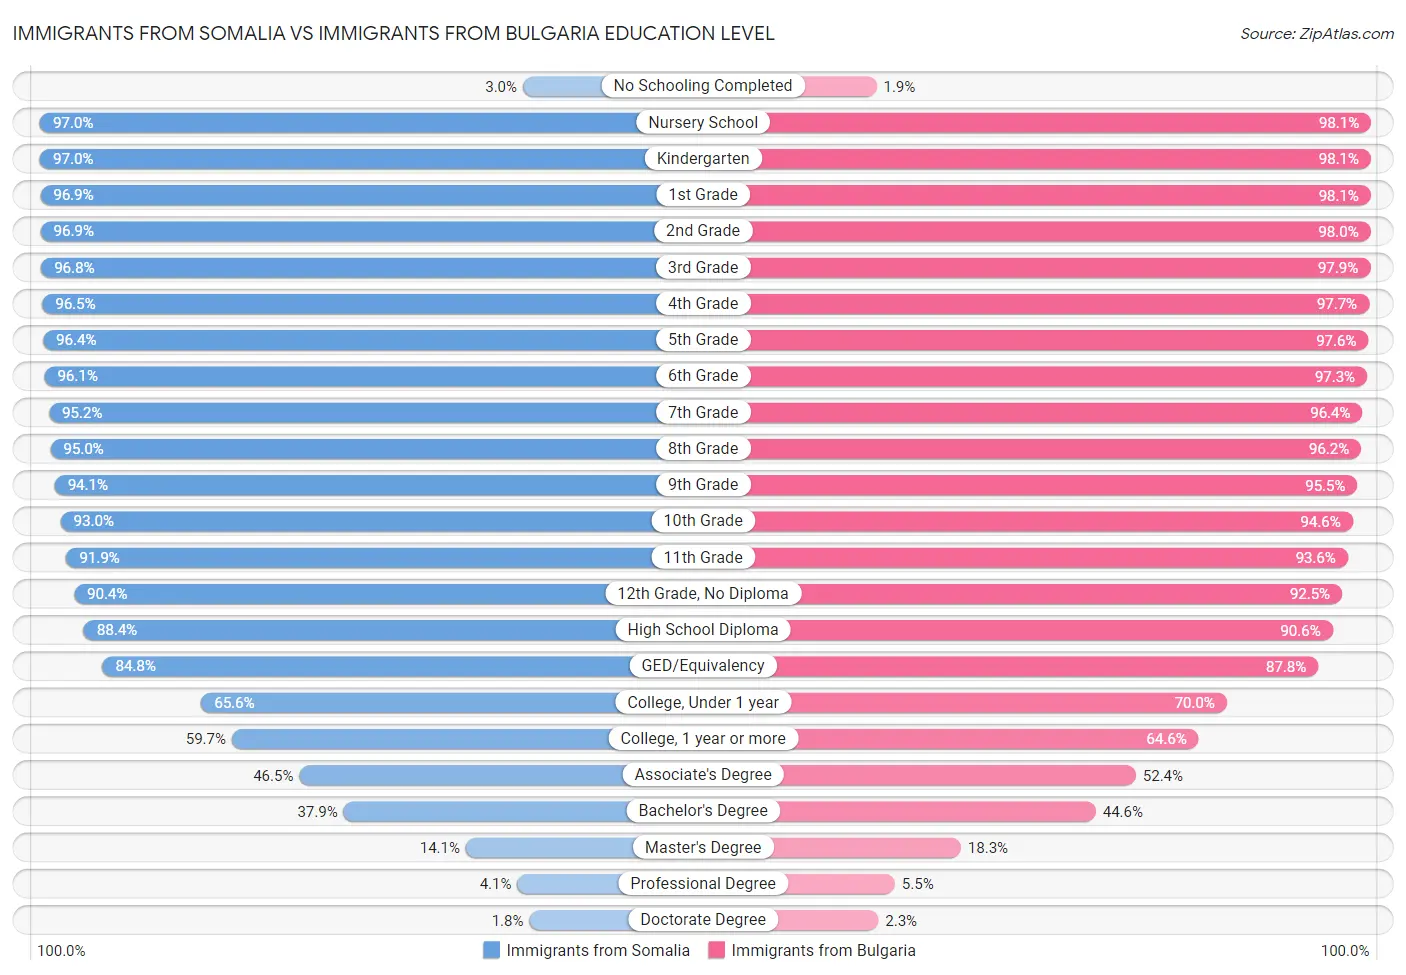 Immigrants from Somalia vs Immigrants from Bulgaria Education Level